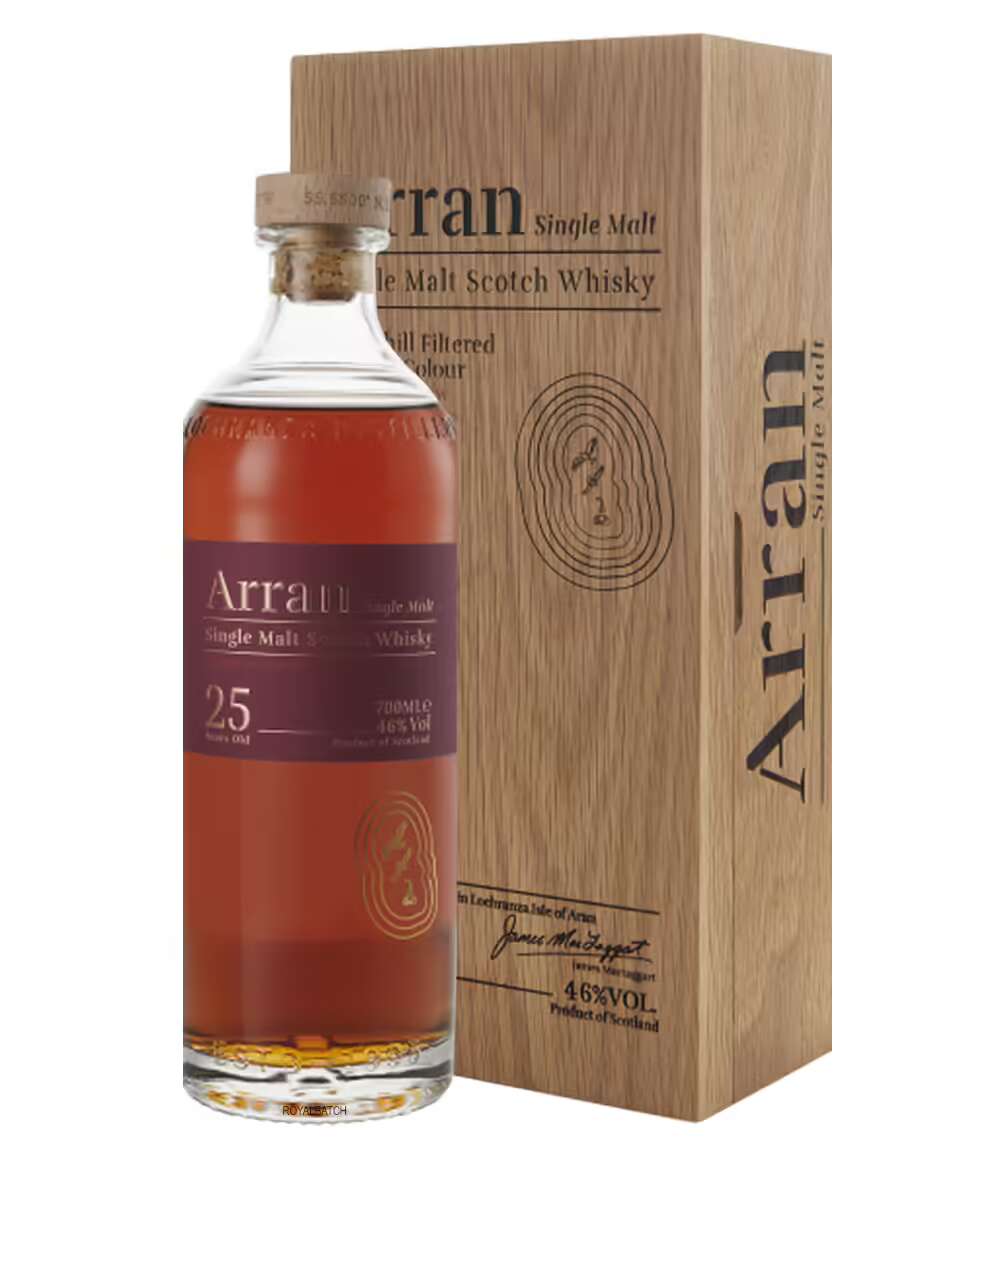 The Arran 25 Year Old Single Malt Scotch Whisky